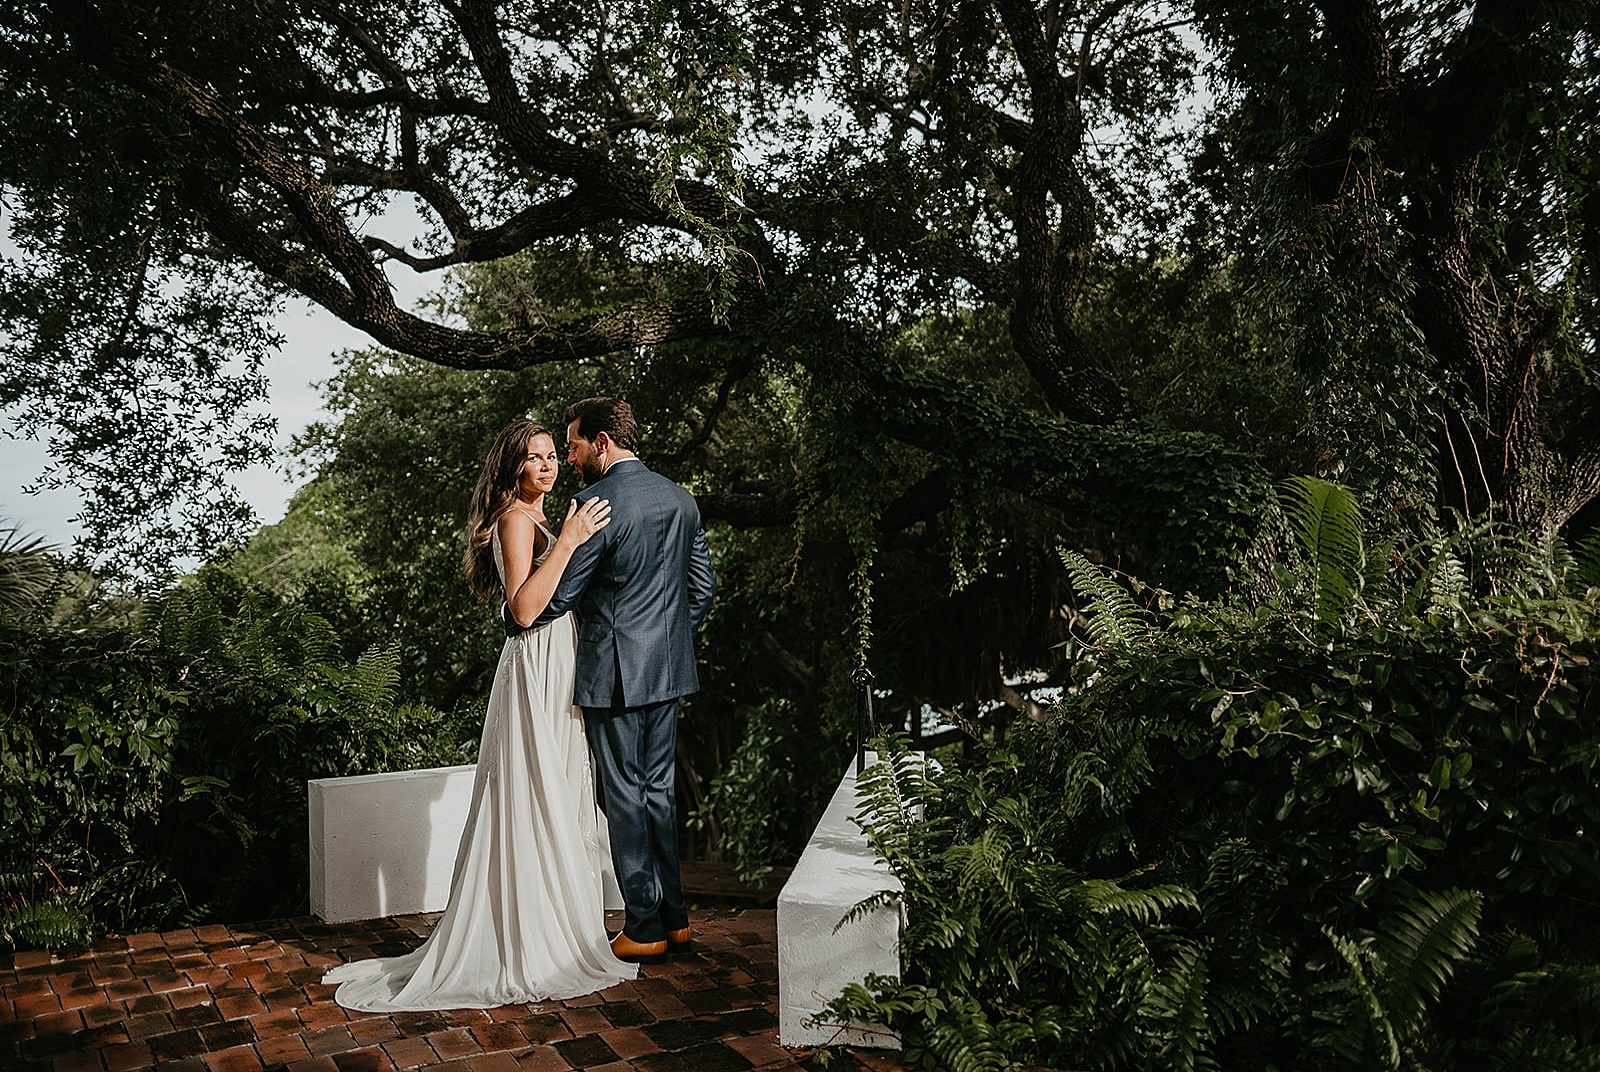 Intimate Jupiter Lighthouse Wedding captured by Jupiter Florida Wedding Photographer, Krystal Capone Photography